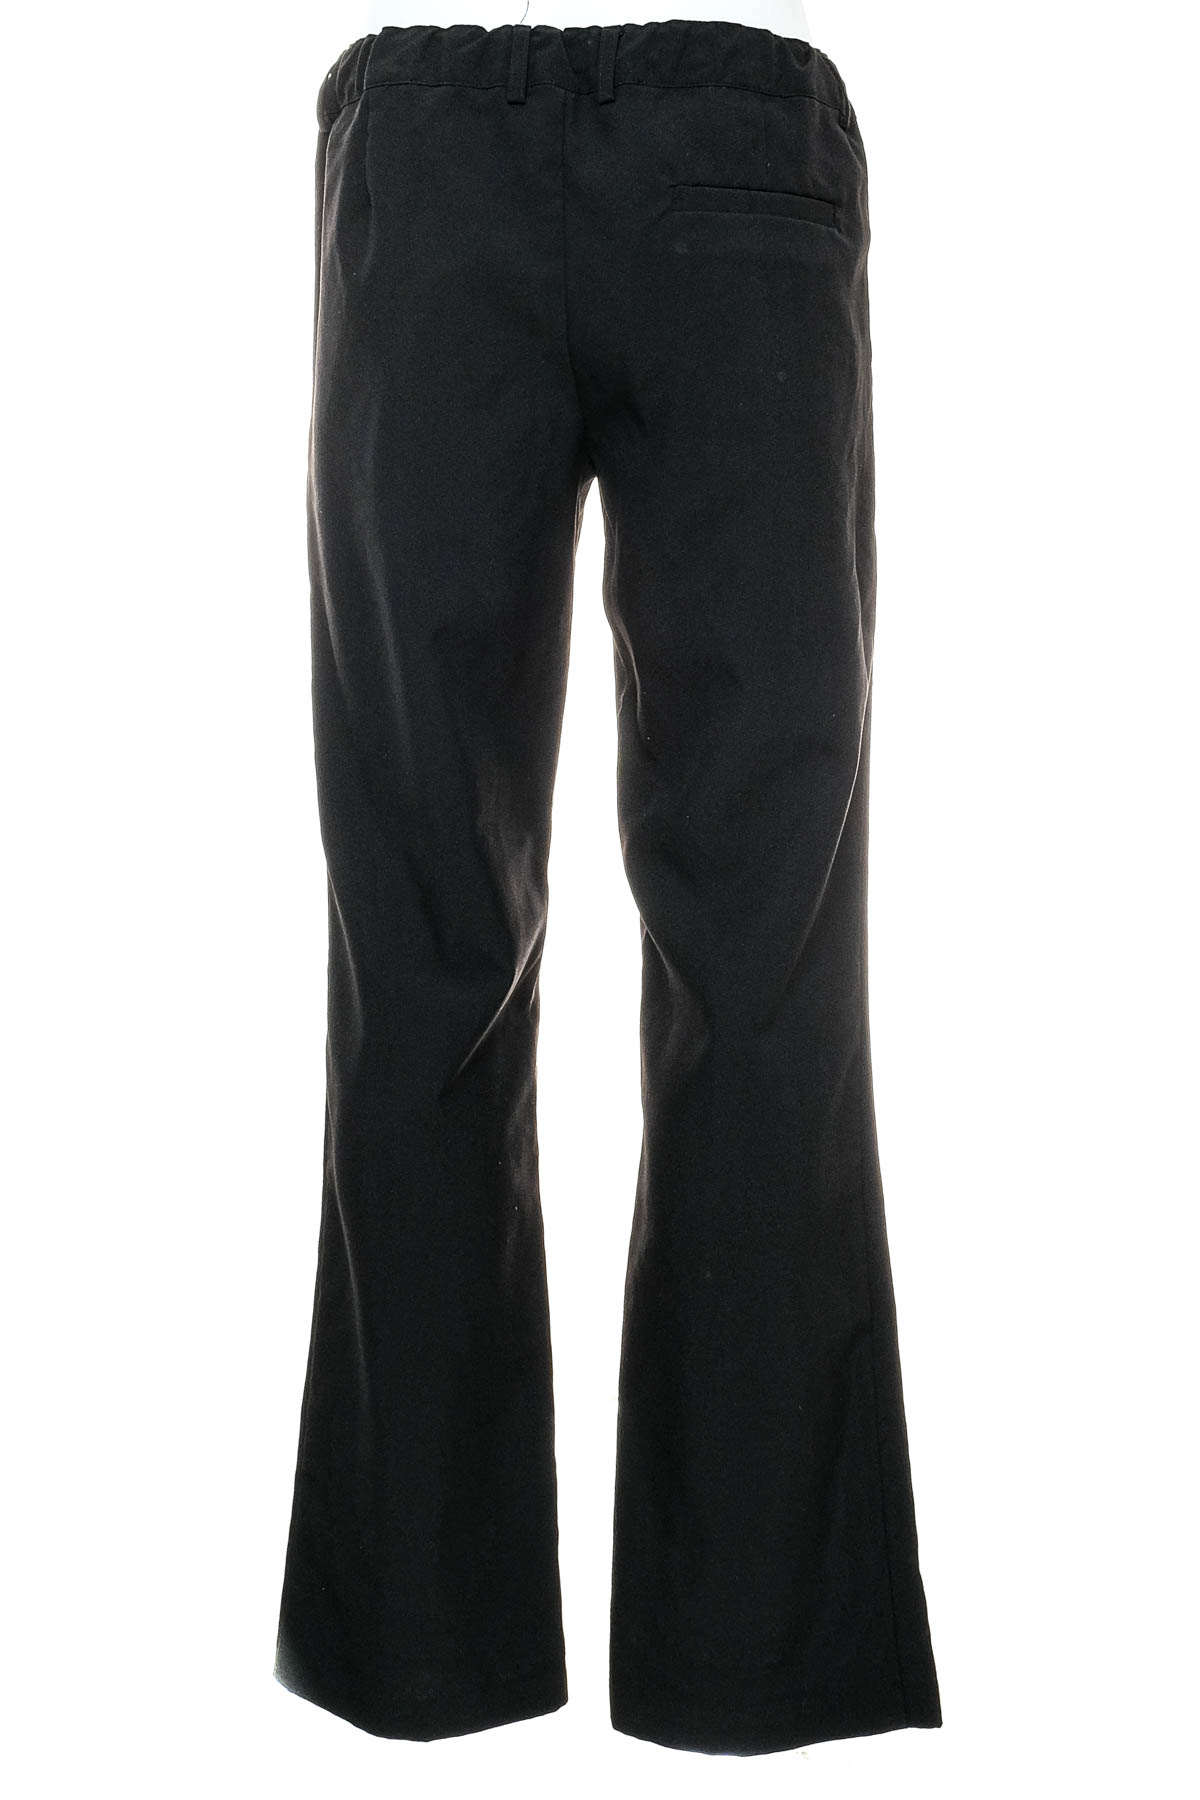 Trousers for boy - Bpc Bonprix Collection - 1